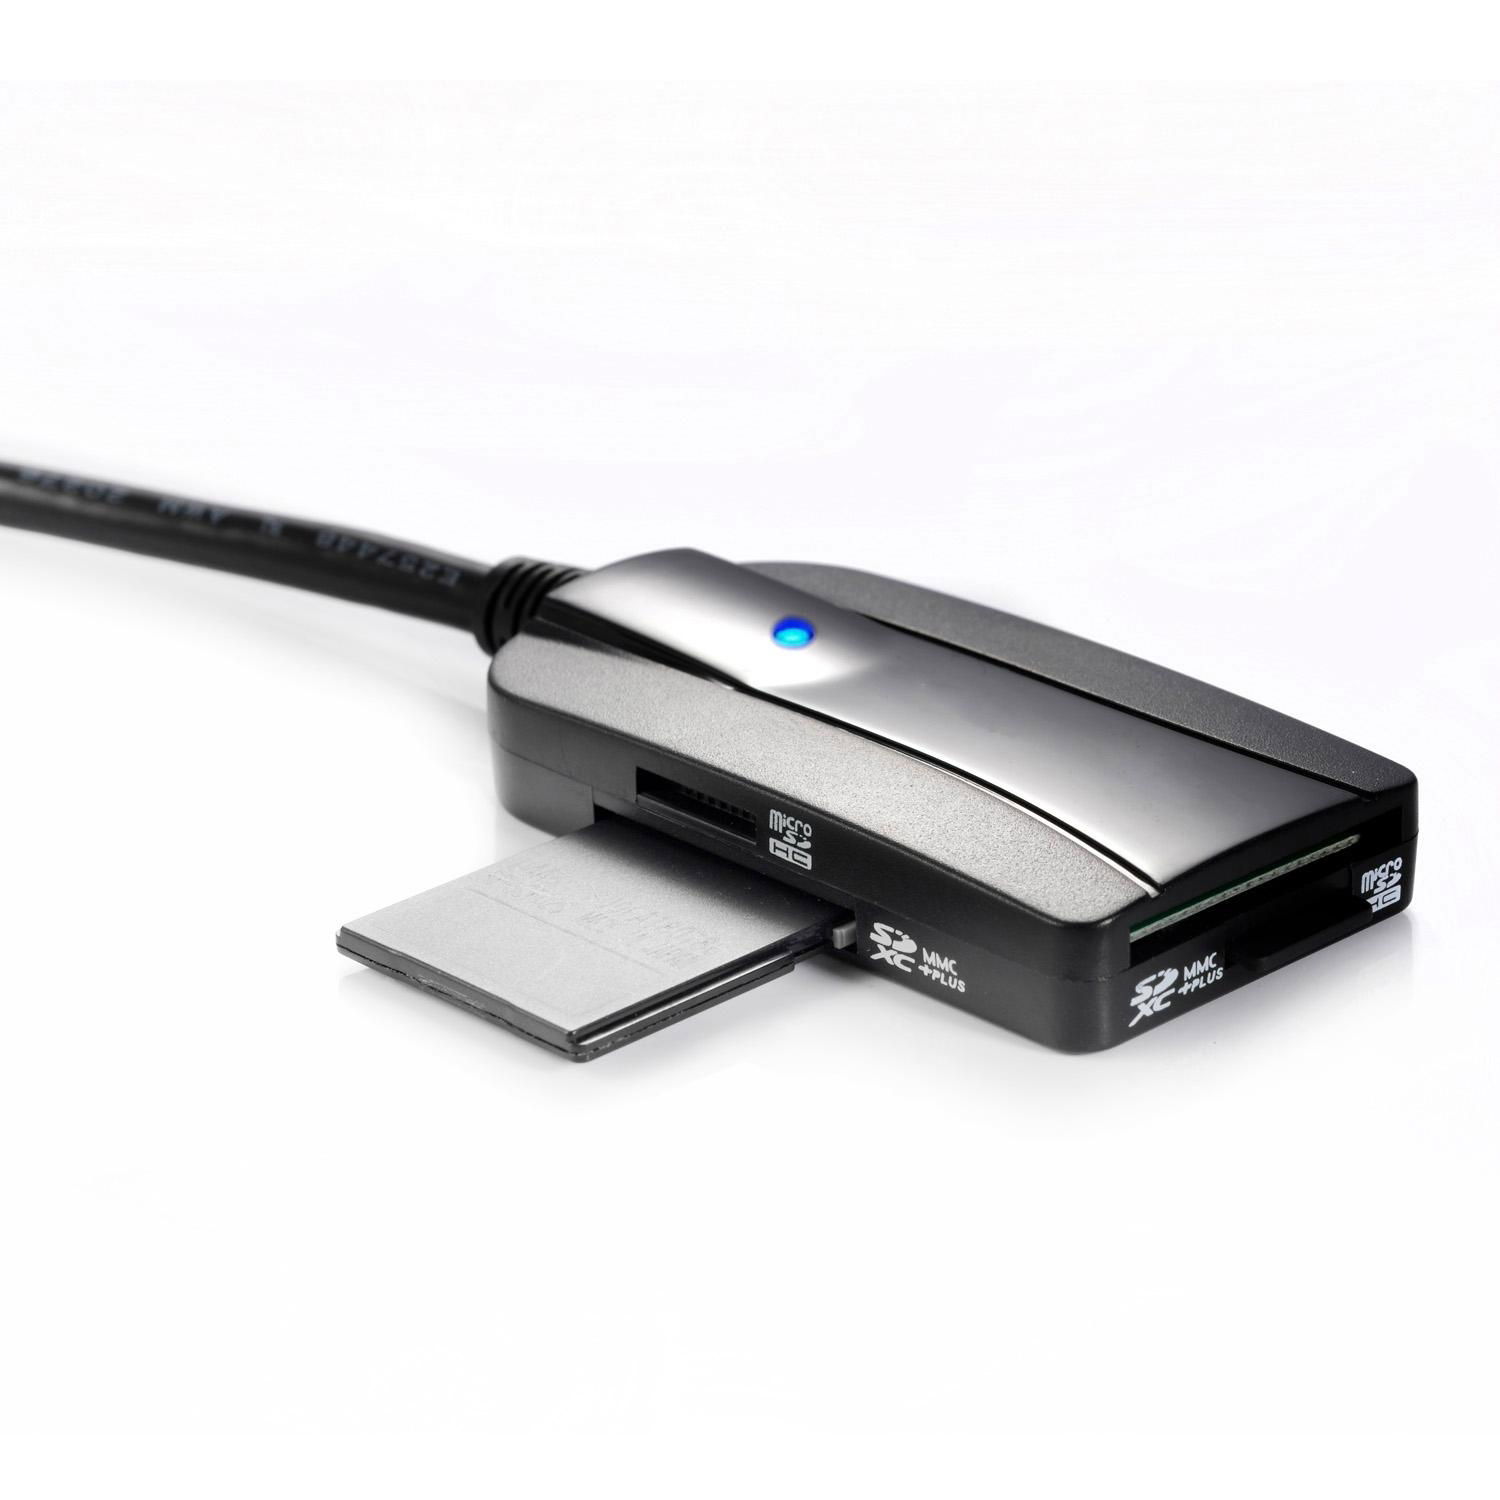 USB 3.0 4in1 Digital Memory Card Reader/writer 